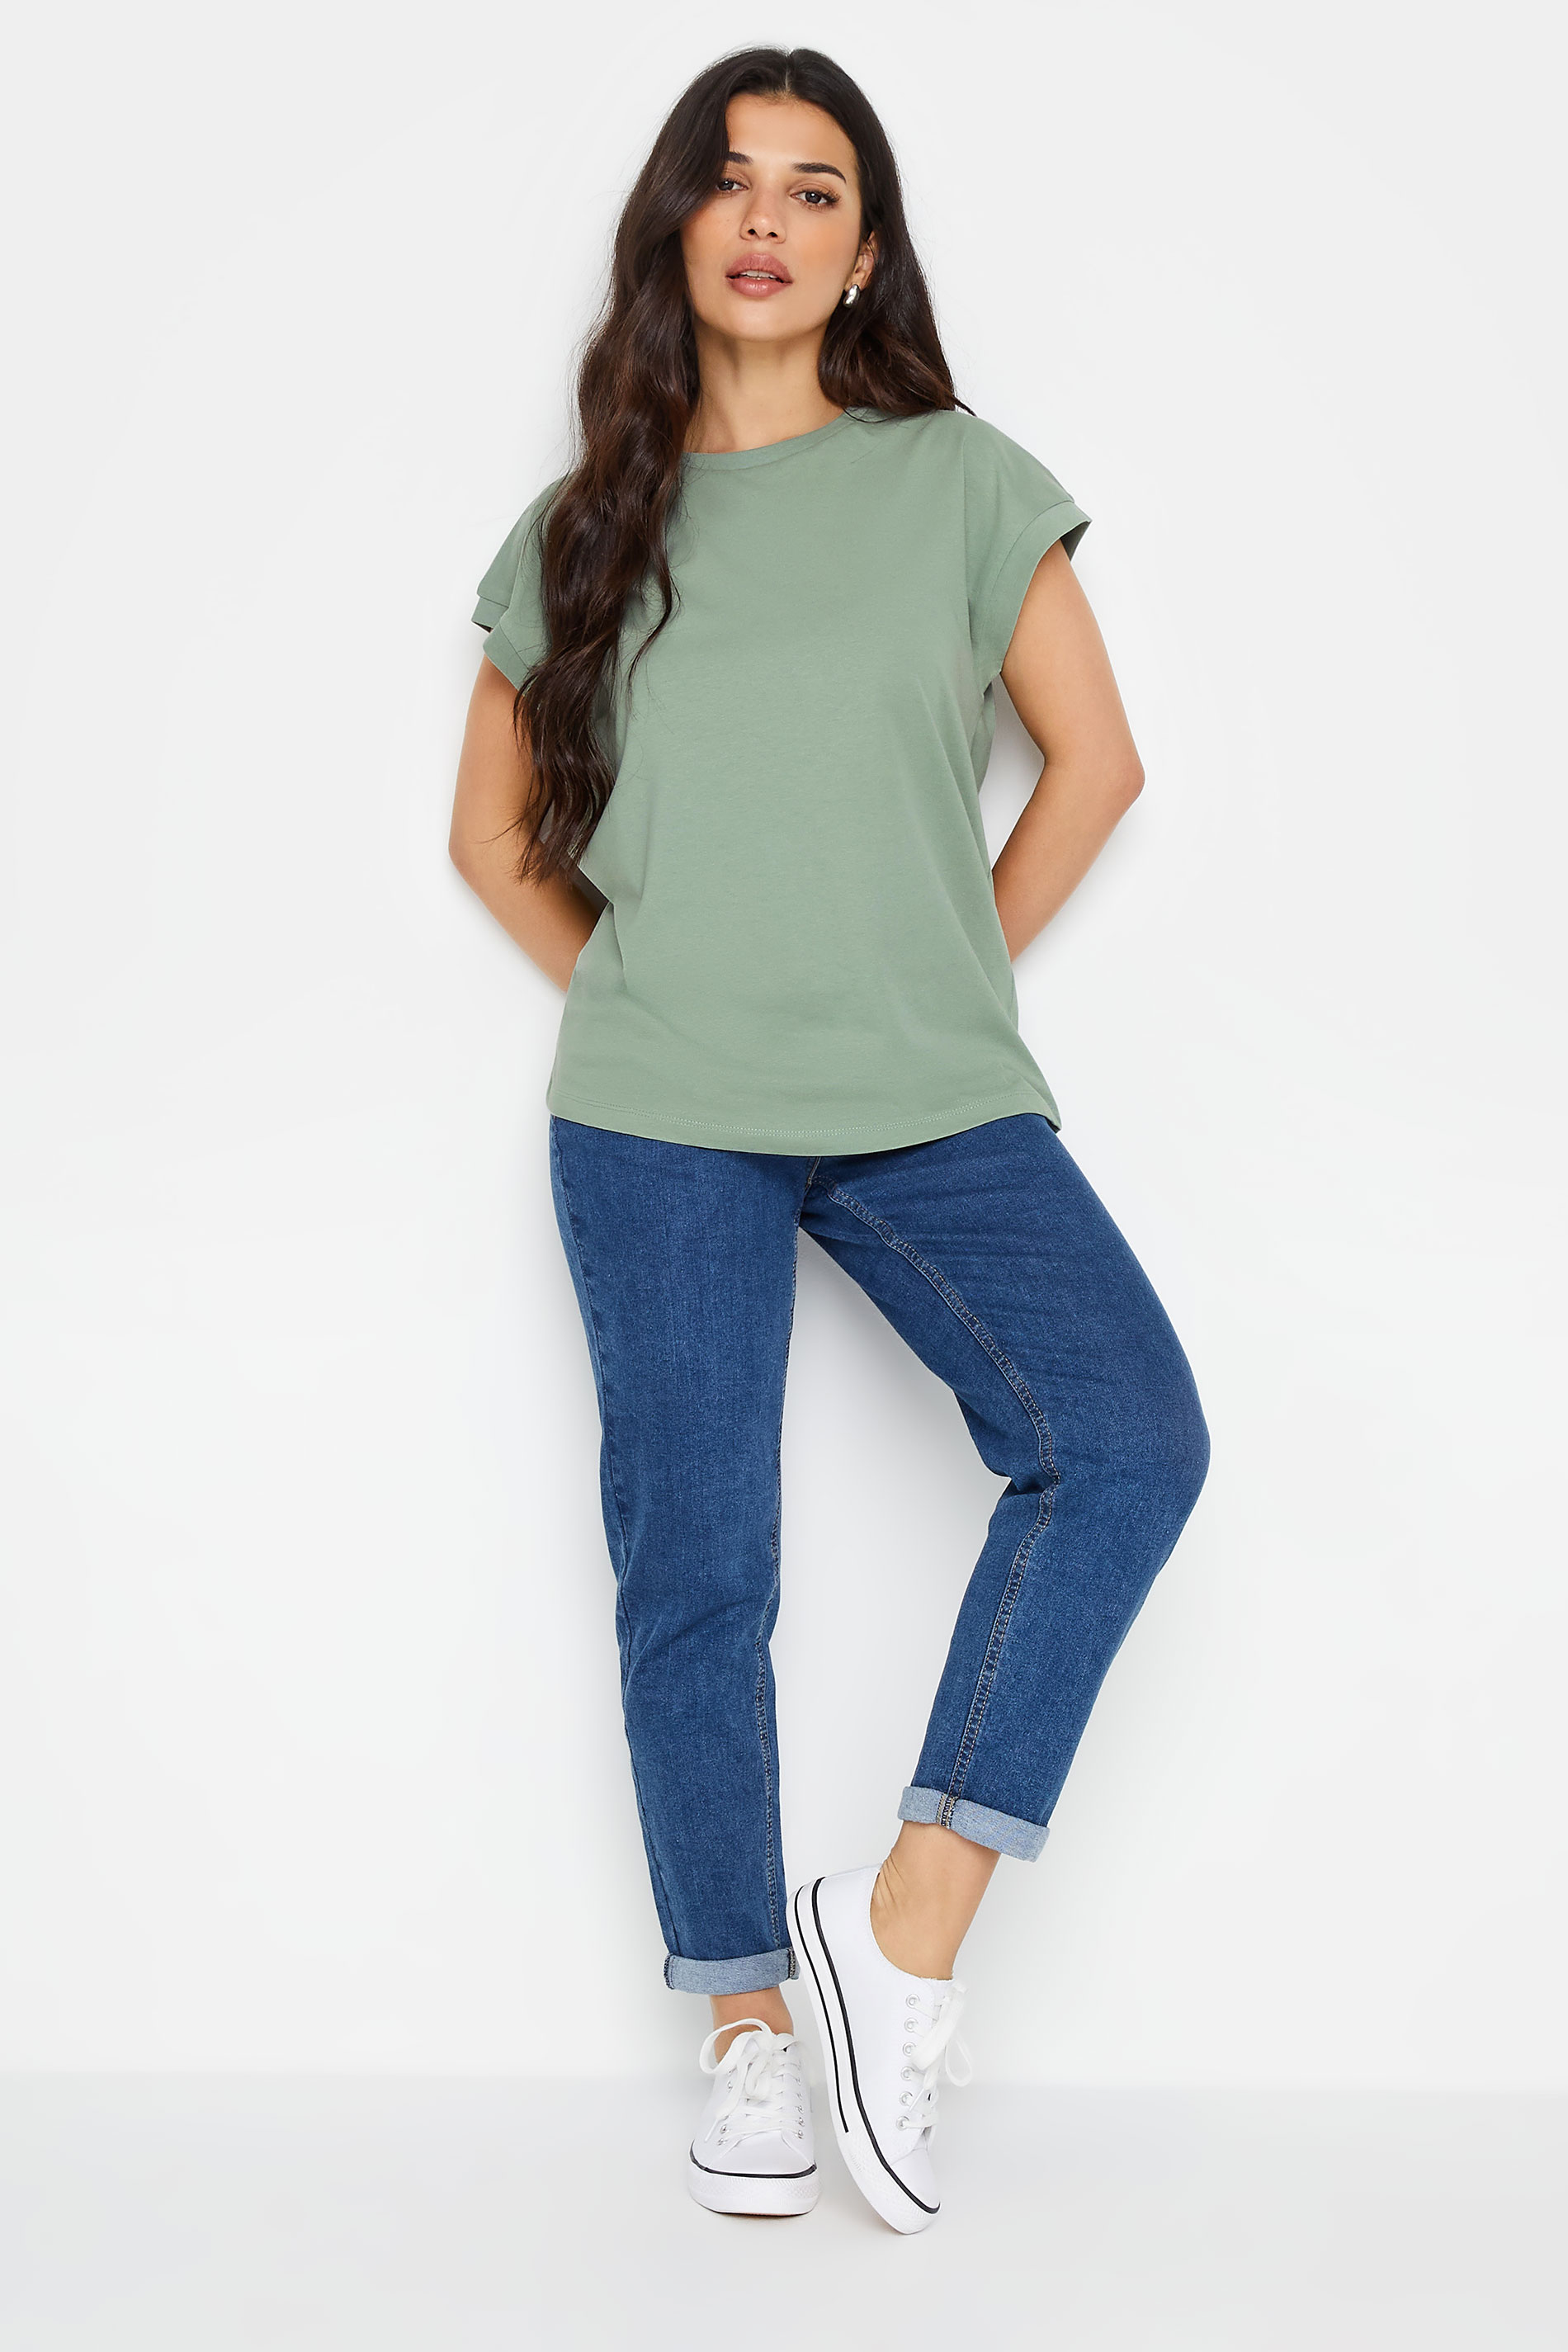 PixieGirl Petite Women's Sage Green Short Sleeve T-Shirt | PixieGirl 2